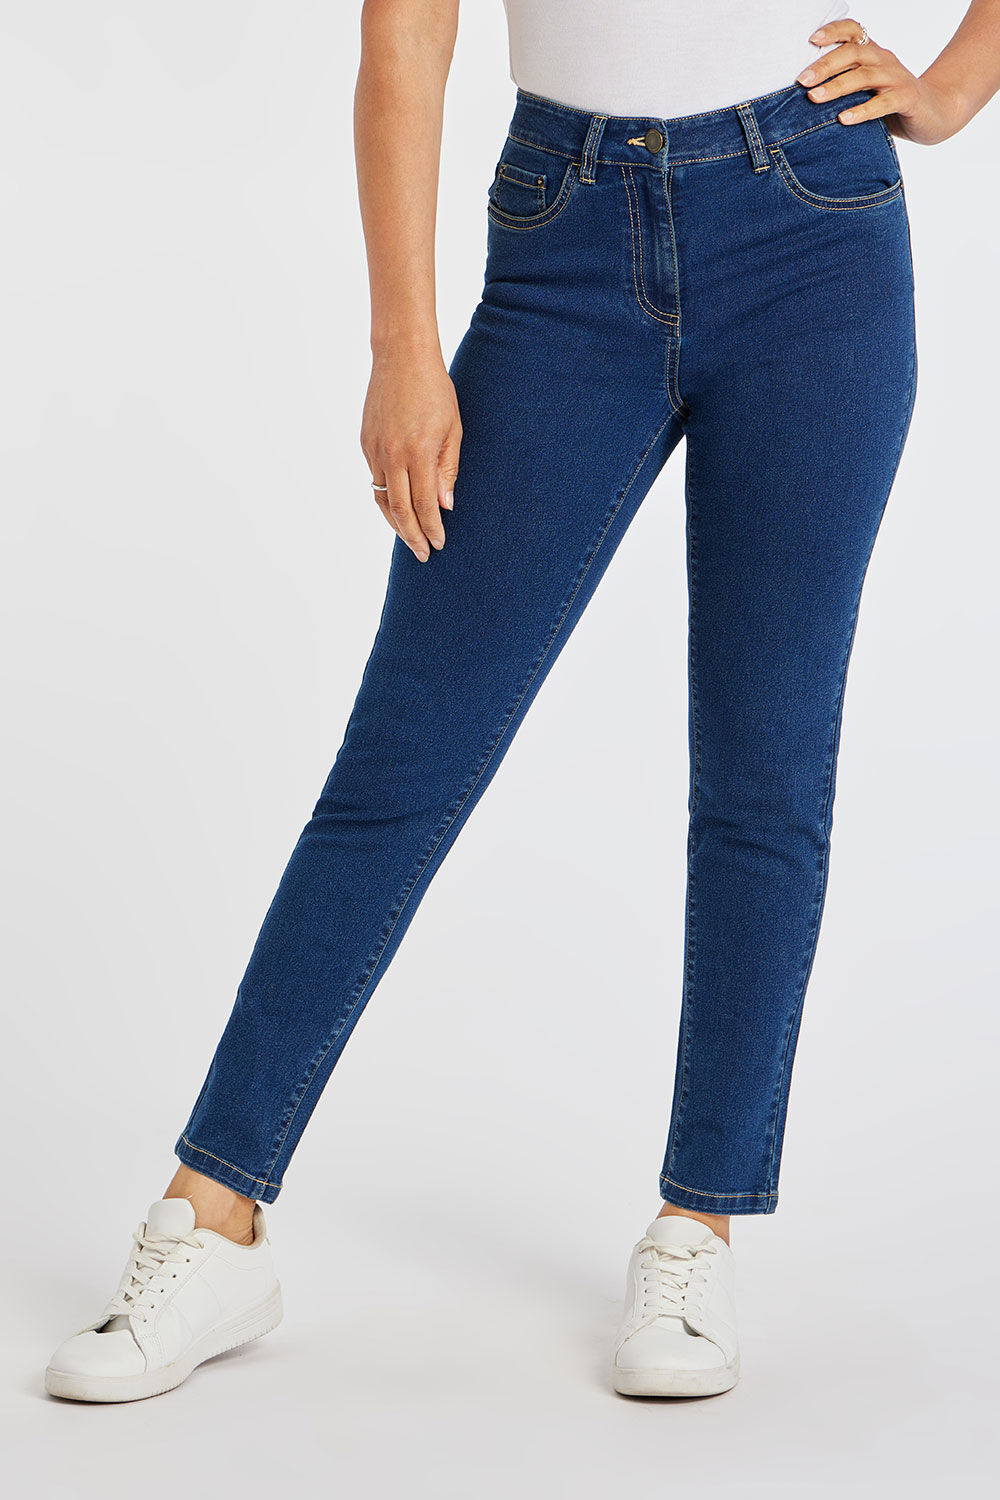 Bonmarche Denim The Susie Slim Leg Jeans, Size: 18